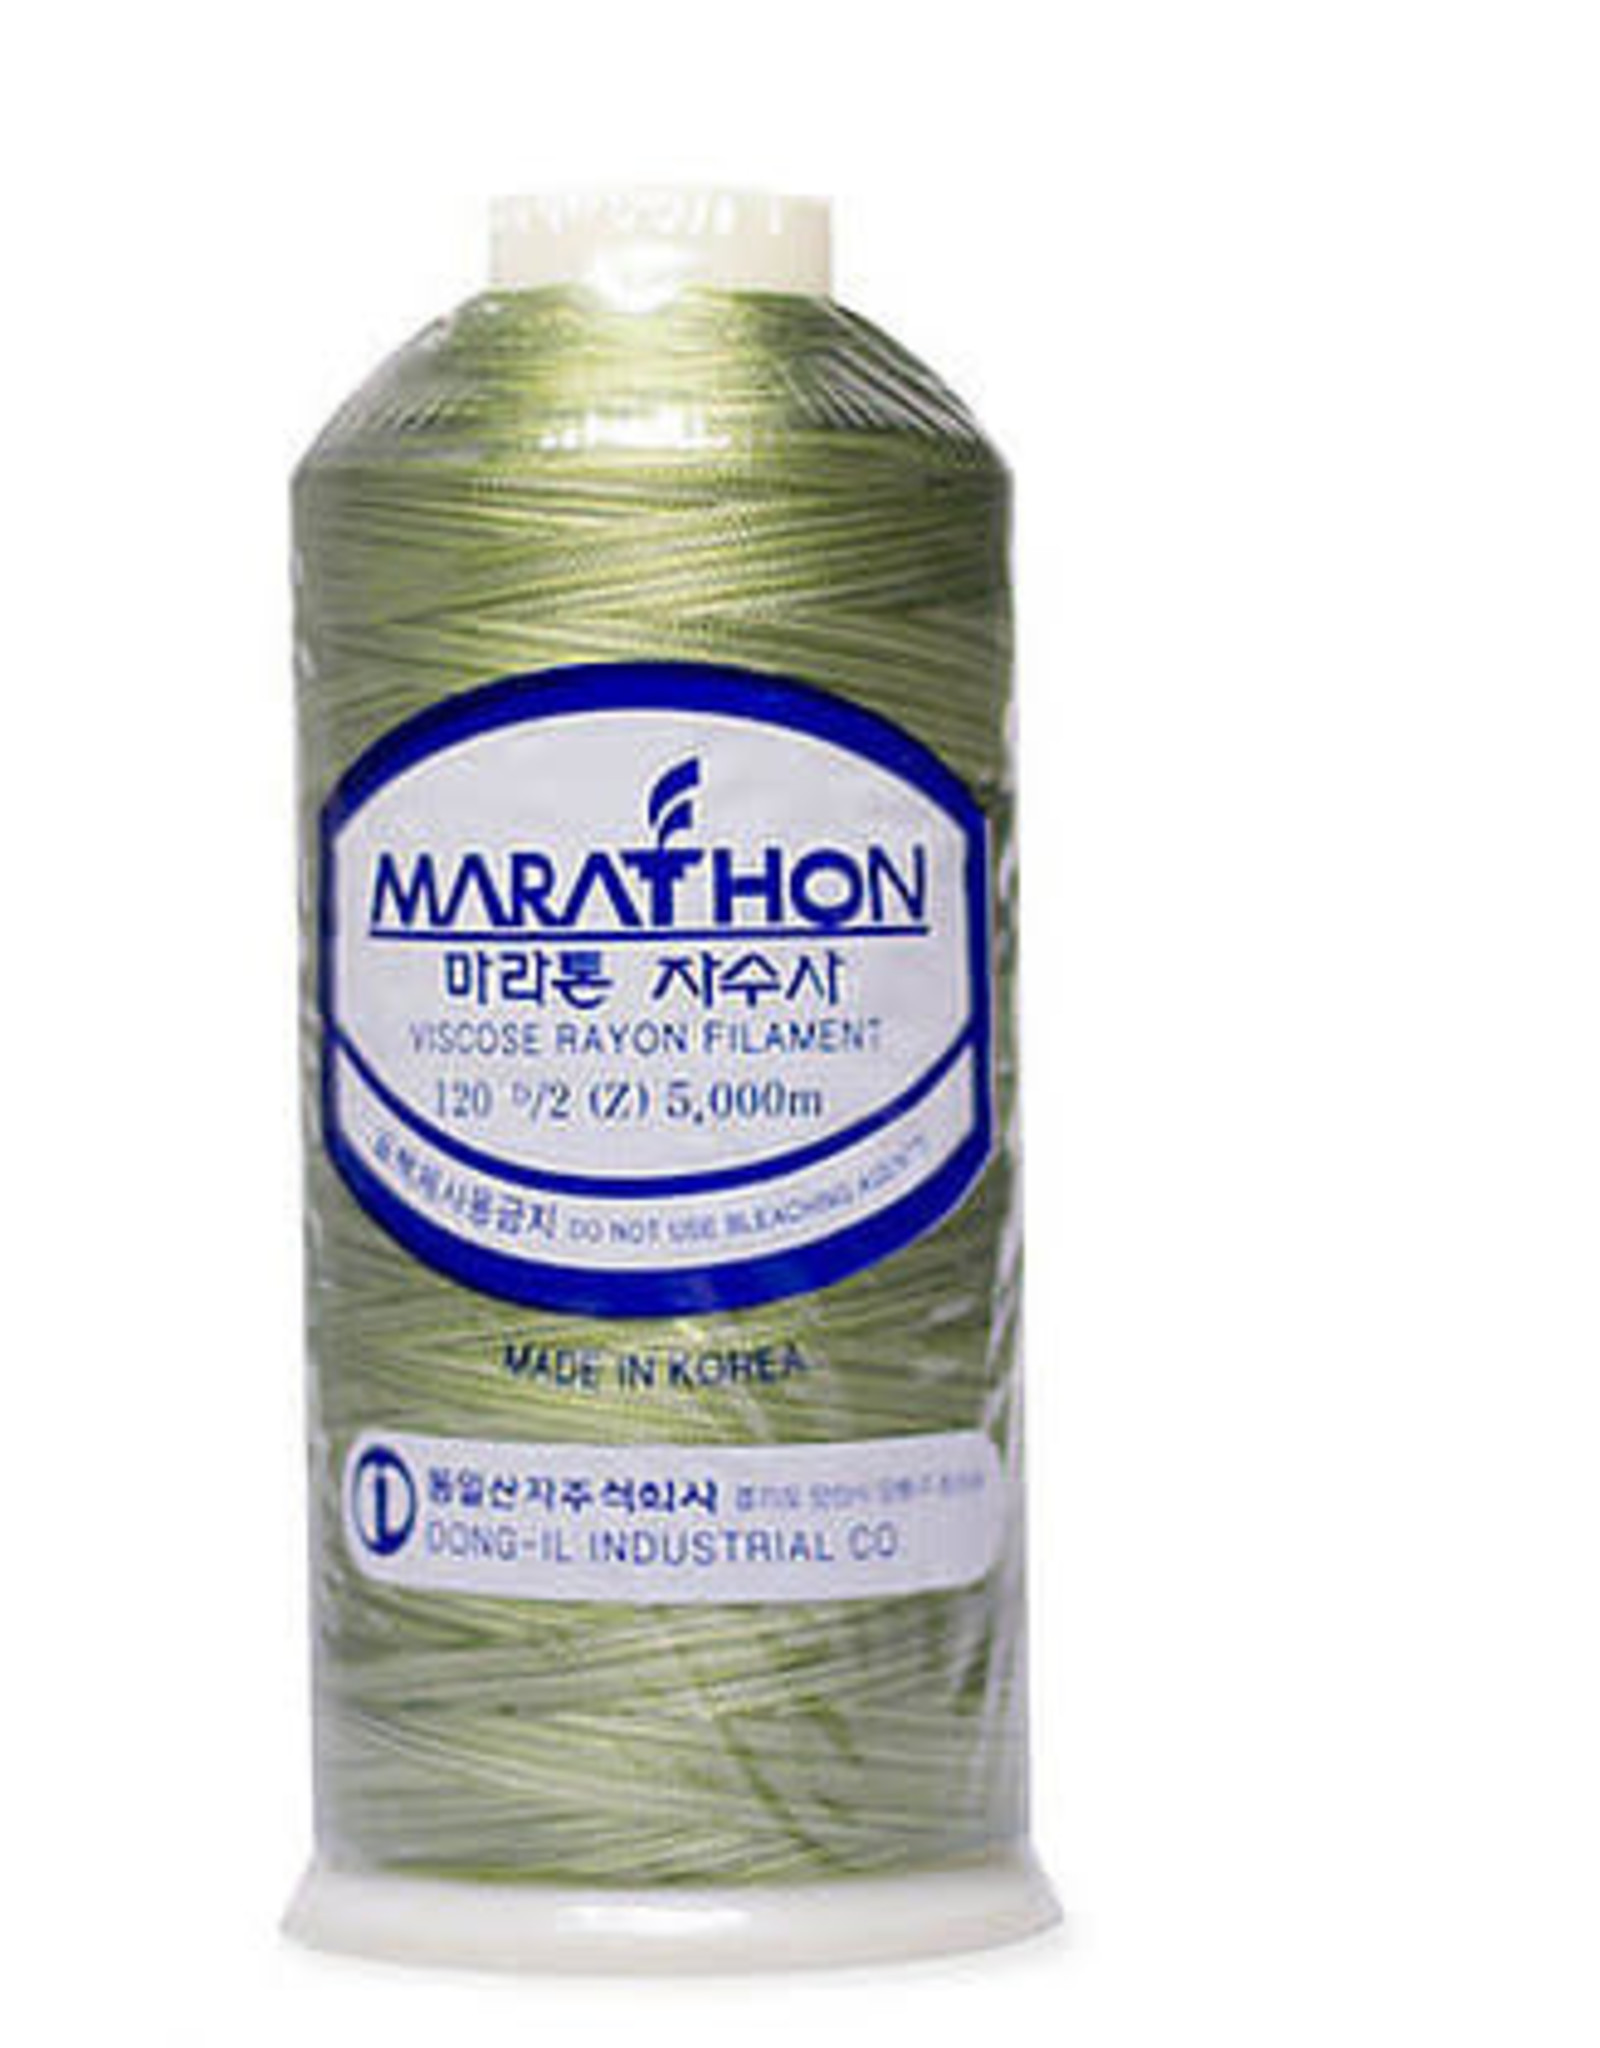 Marathon embroidery (1000)- 5514